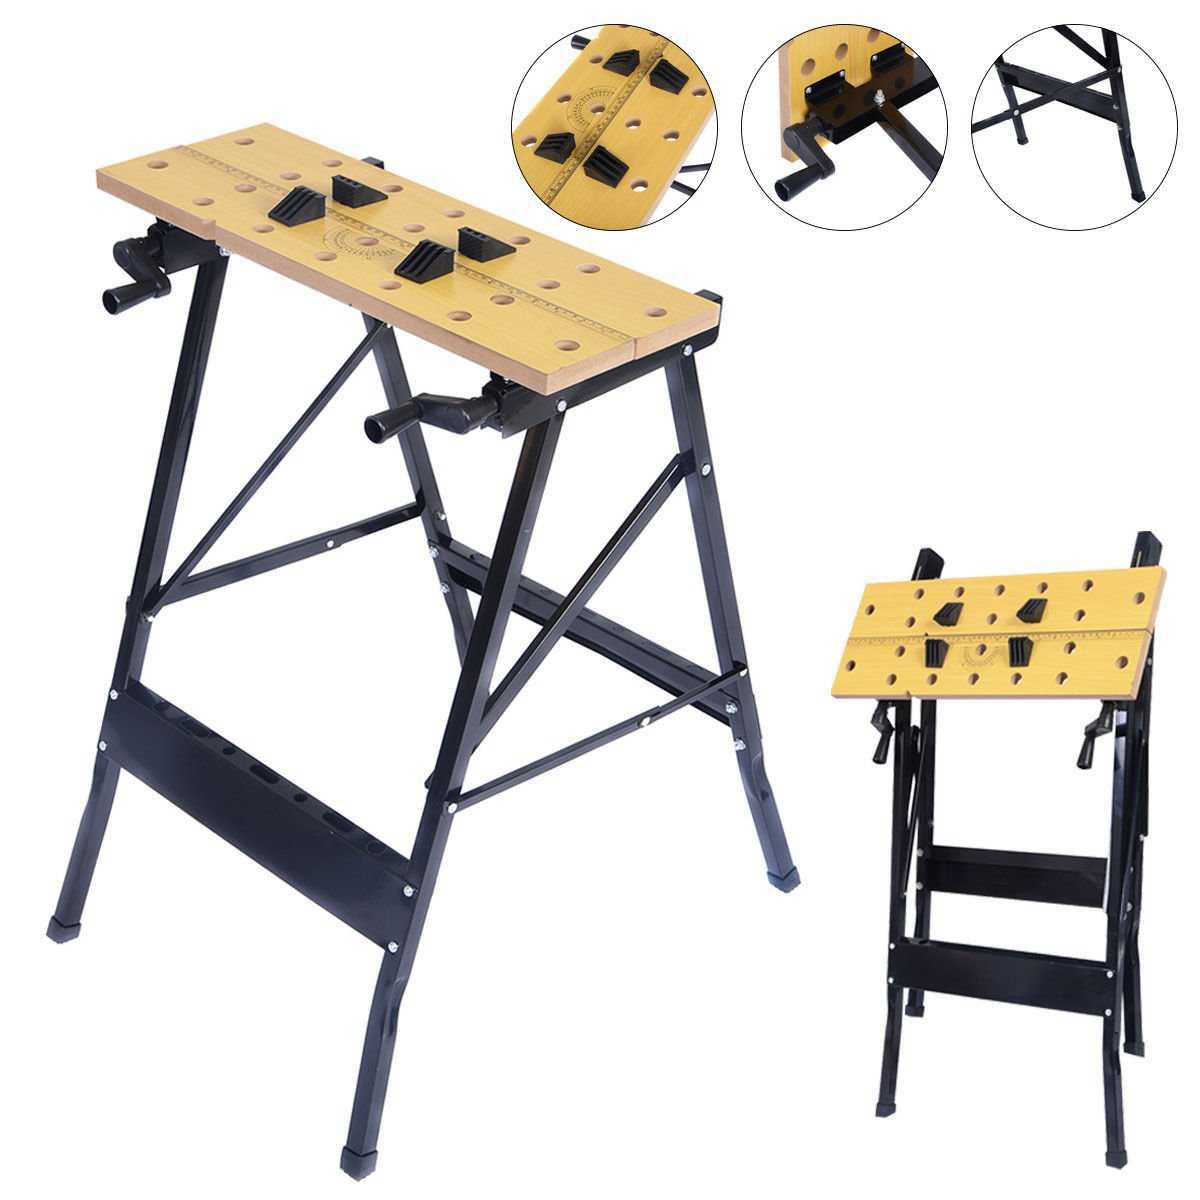 Uenjoy Folding Portable Work Bench Table Tool Garage Repair Workshop